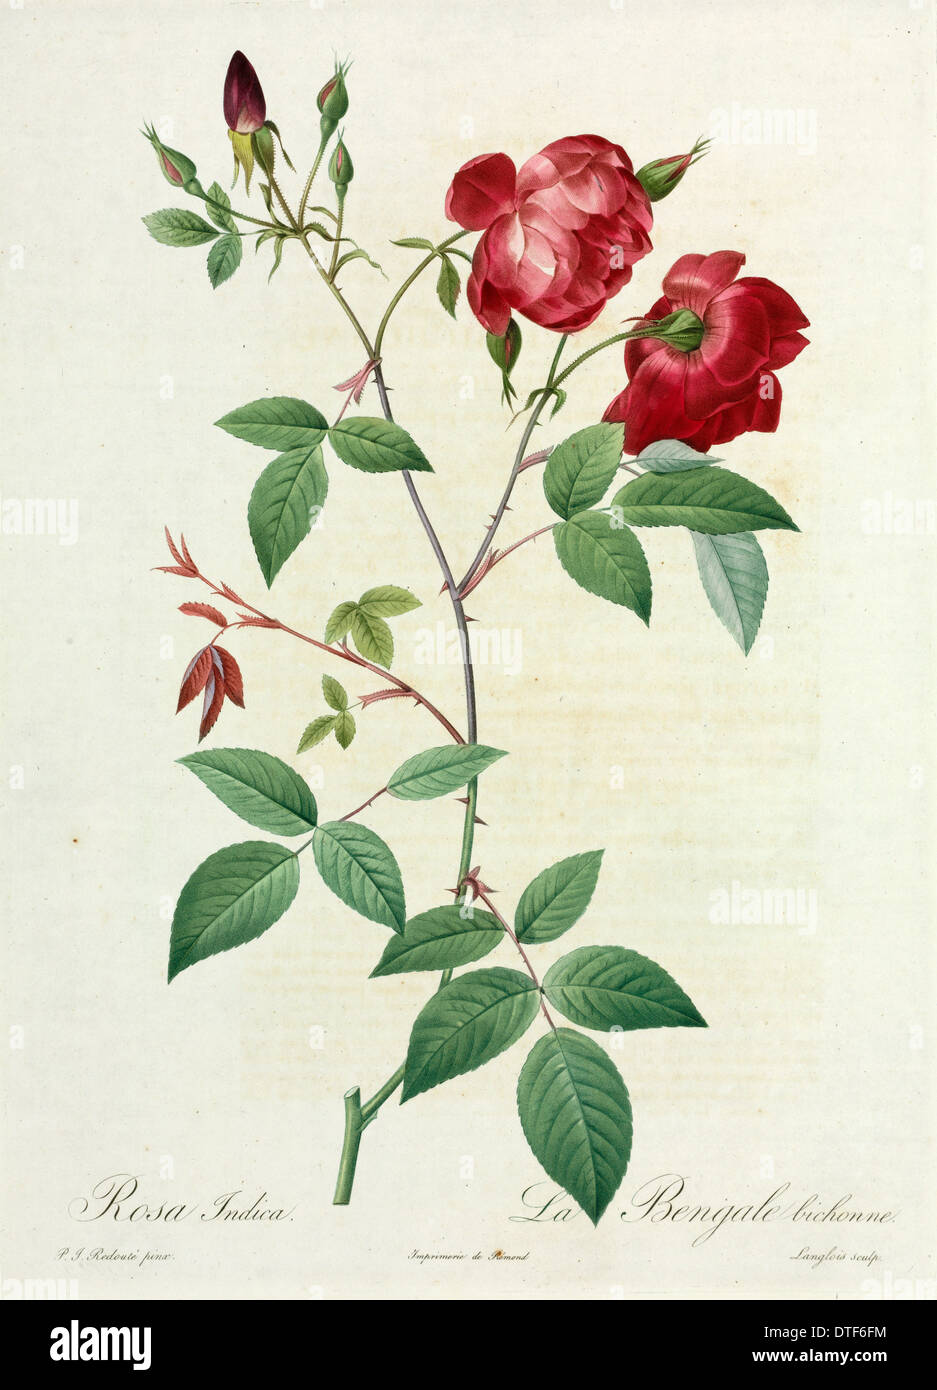 Rosa indica pannosa, velvet China rose Stock Photo